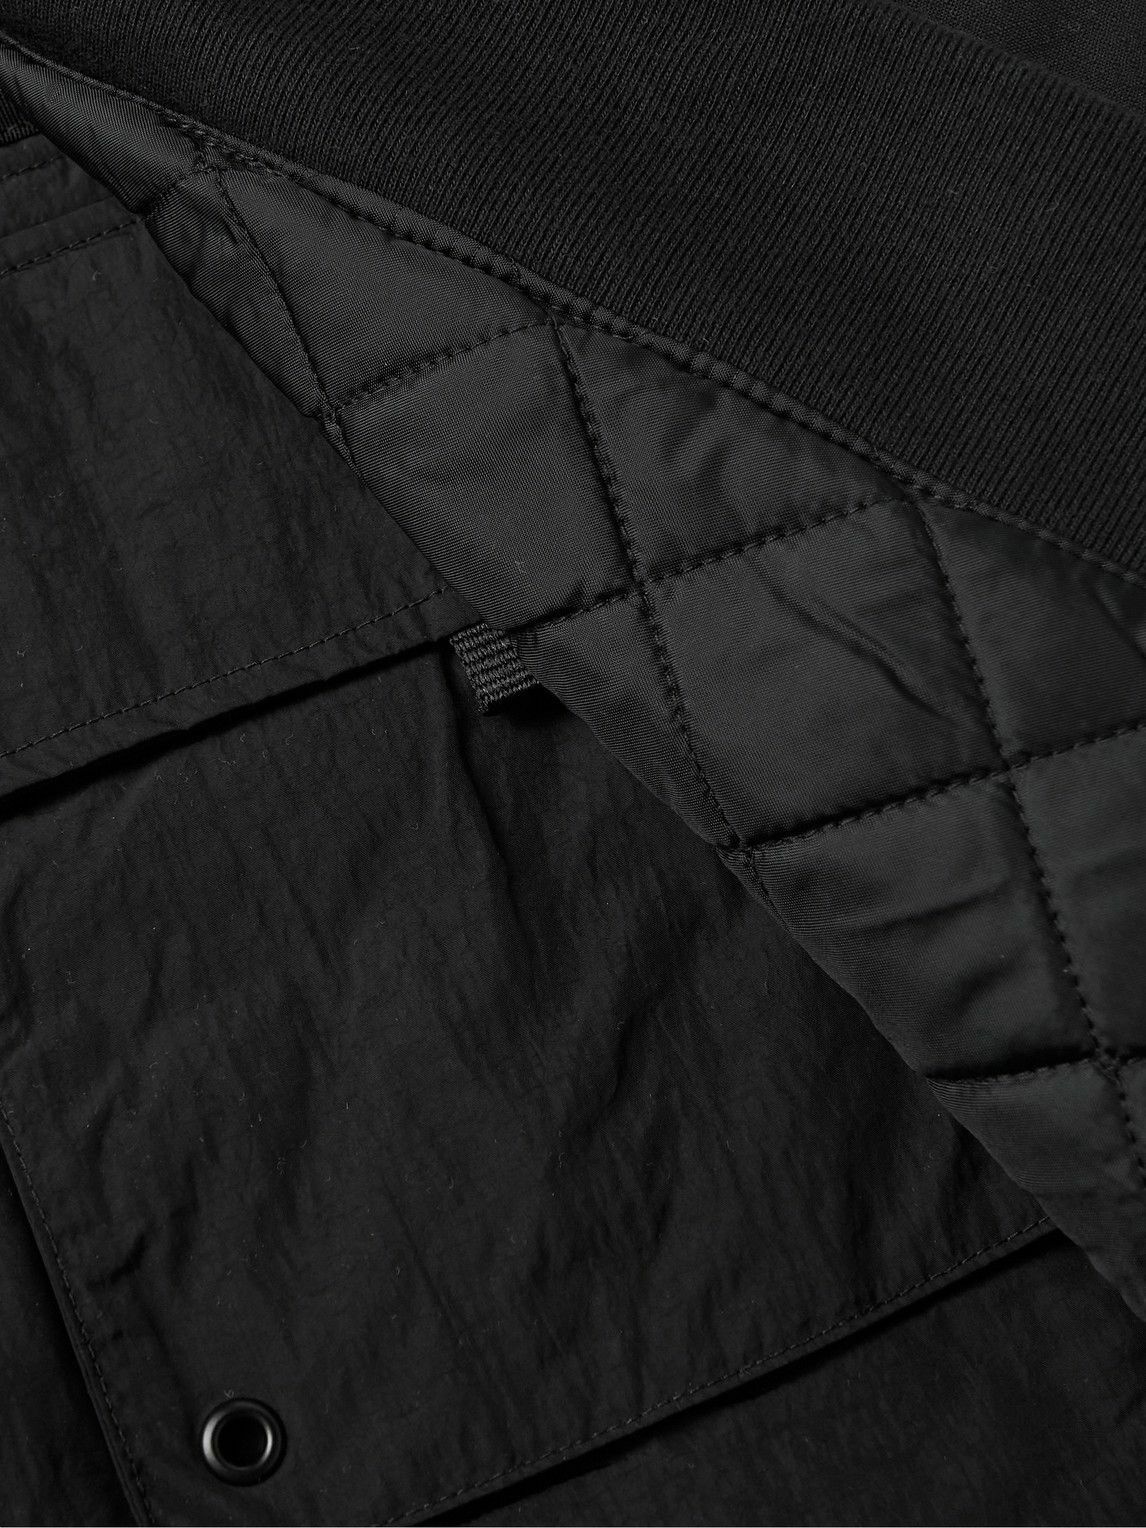 Nike - PEACEMINUSONE NRG Convertible Ripstop and Padded Shell Jacket - Black